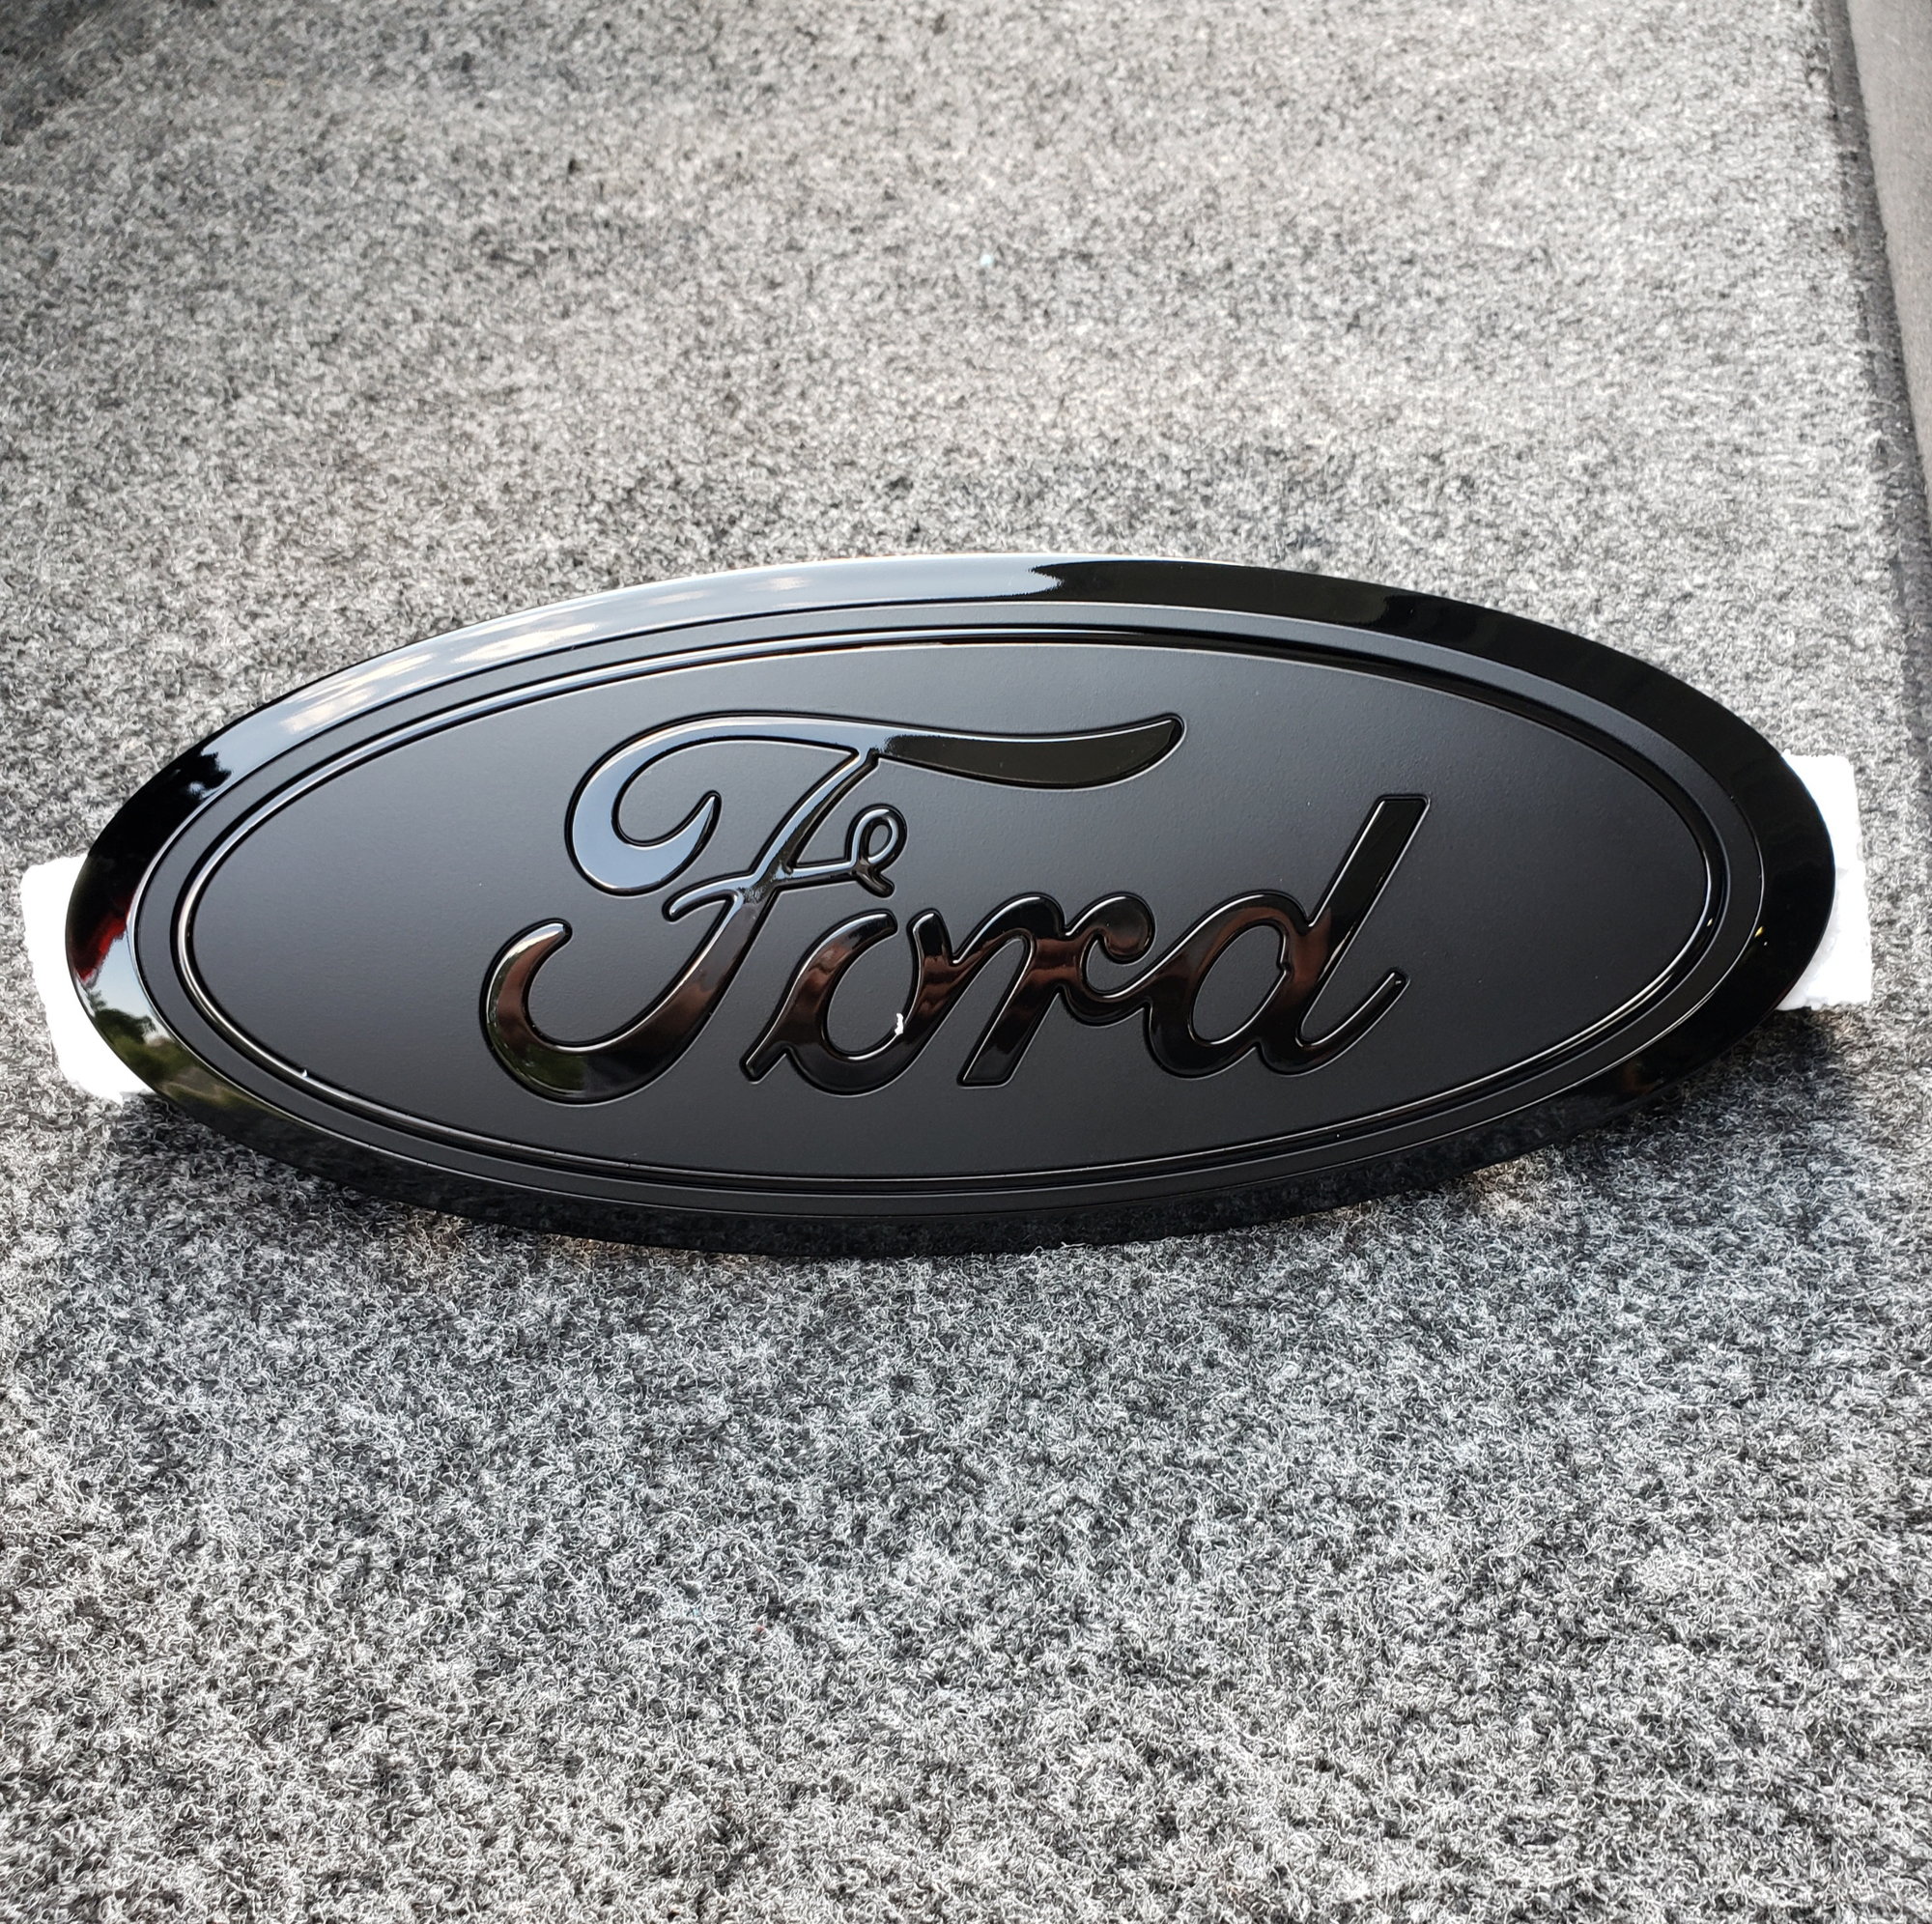 Black oval emblem 2015 f150 - Ford F150 Forum - Community of Ford Truck